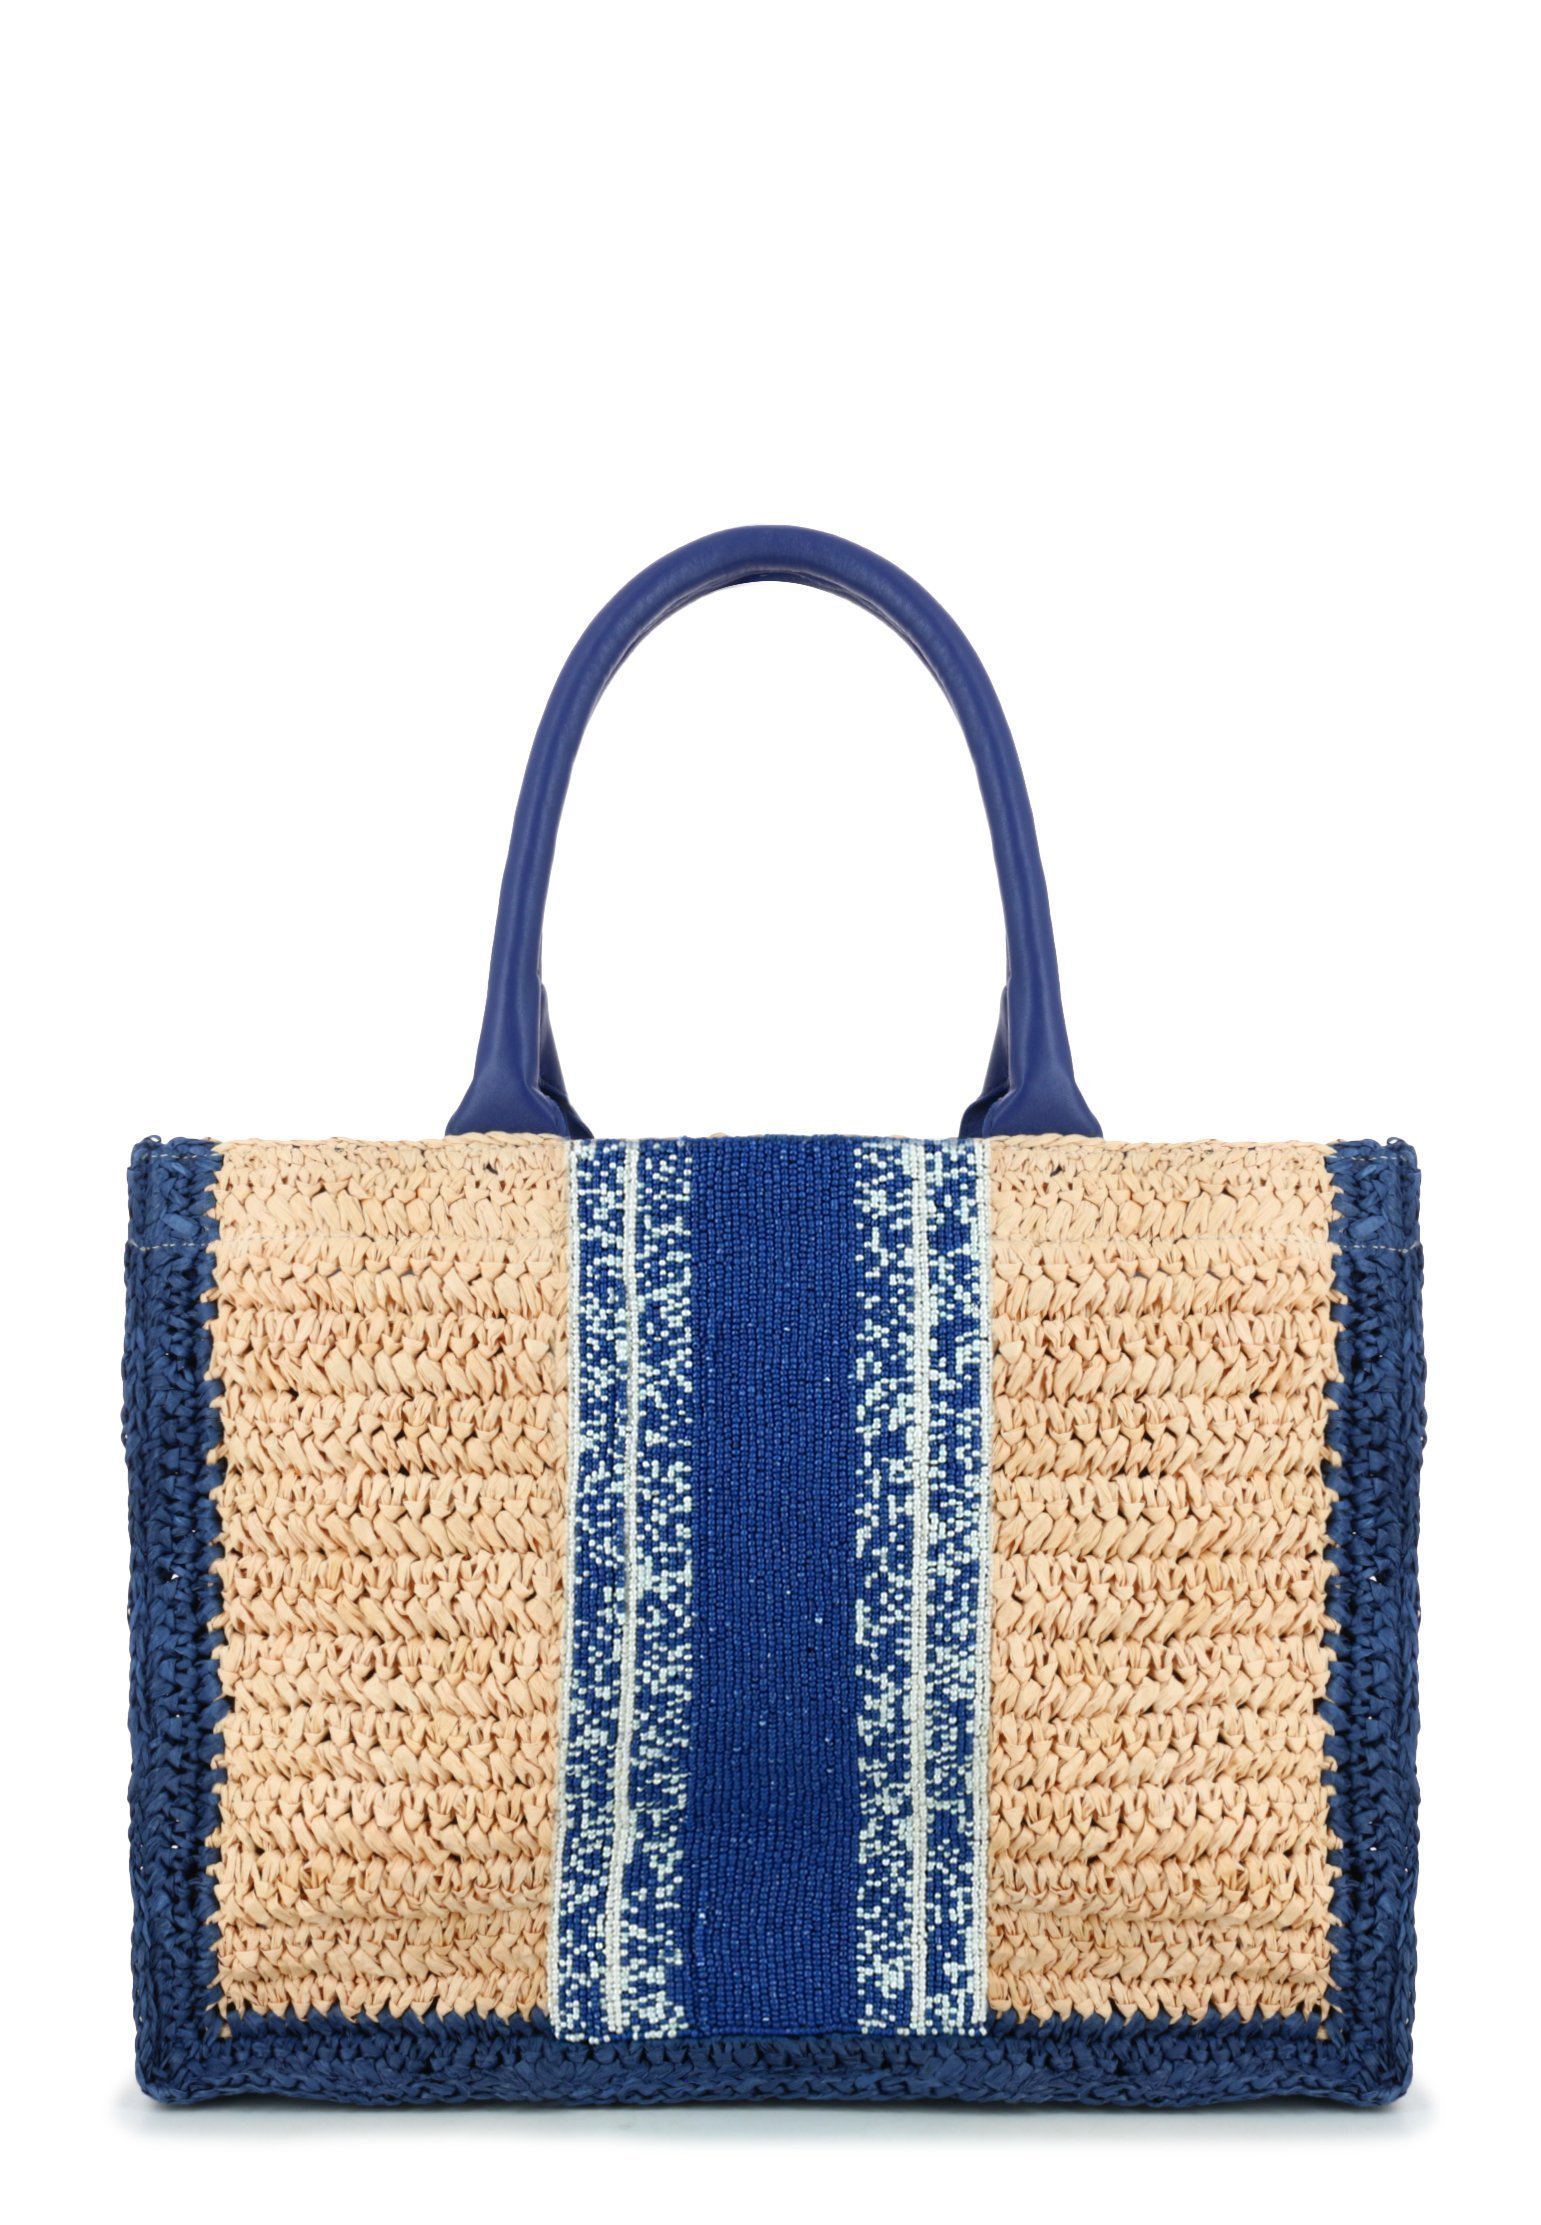 Bag DE SIENA Color: blue (Code: 2327) in online store Allure